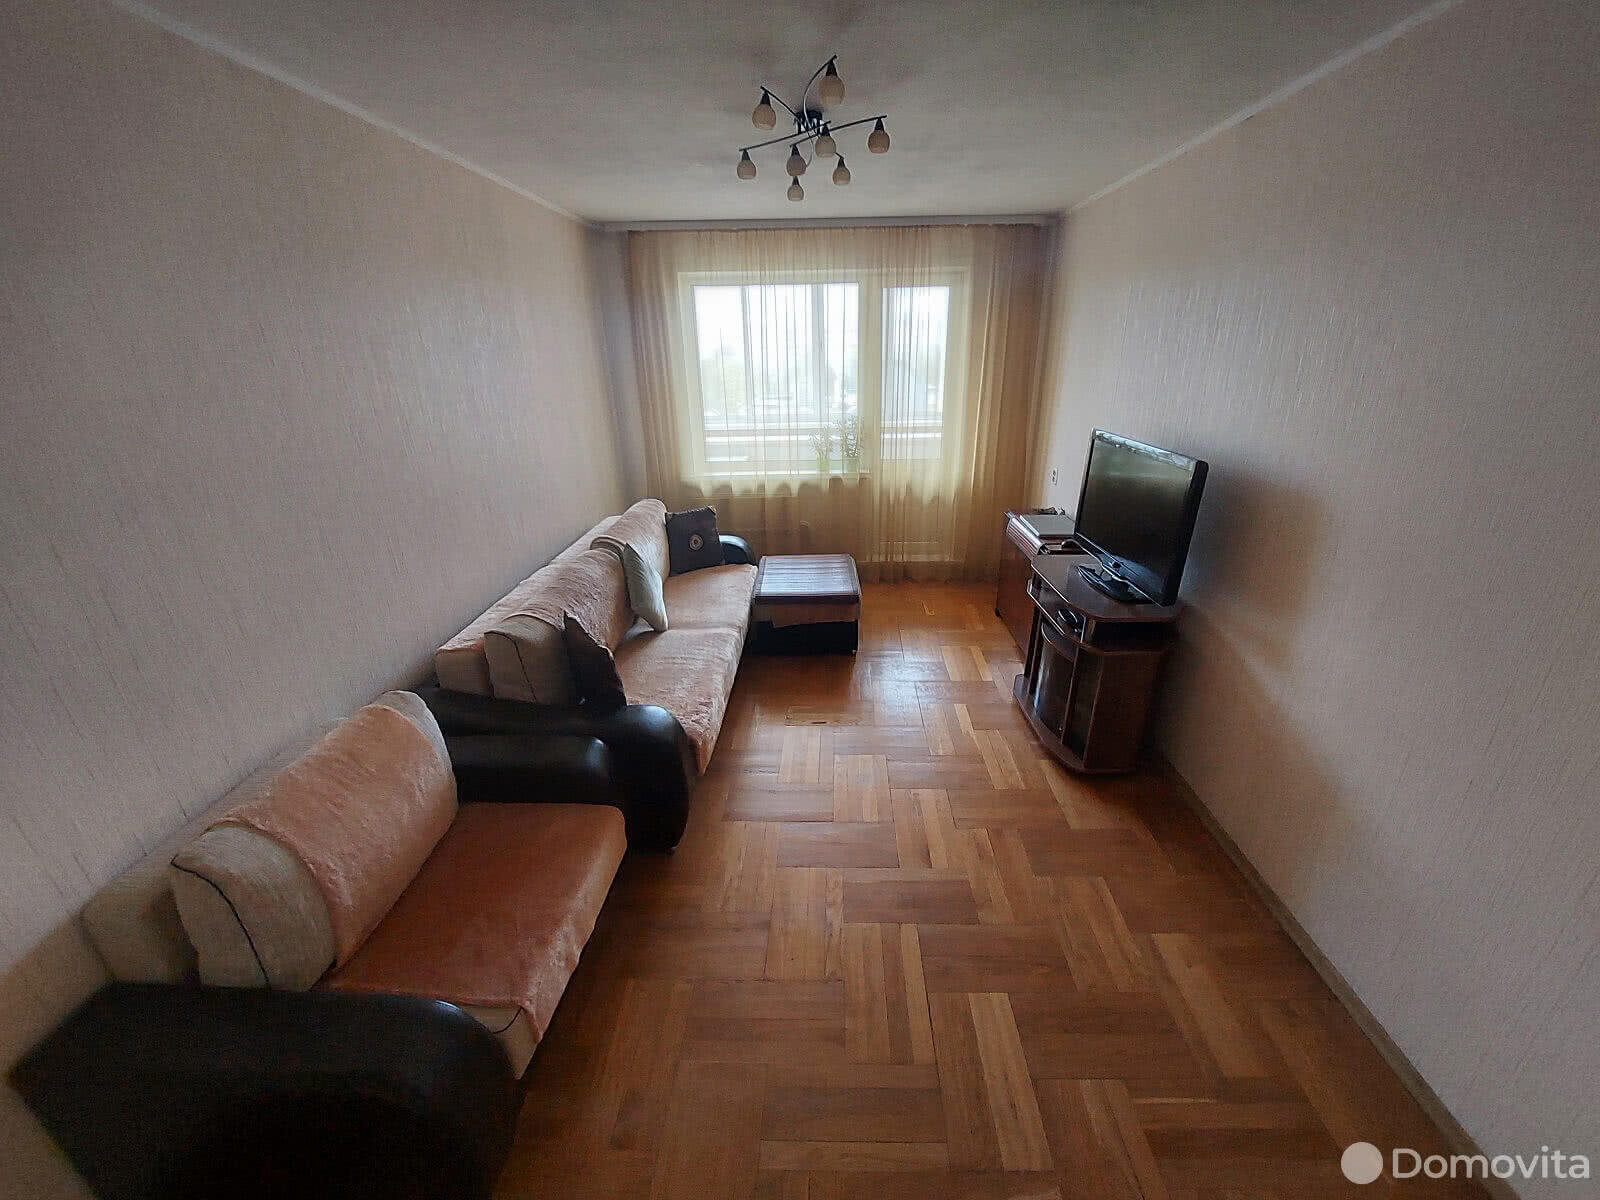 квартира, Минск, ул. Плеханова, д. 95, стоимость продажи 281 565 р.